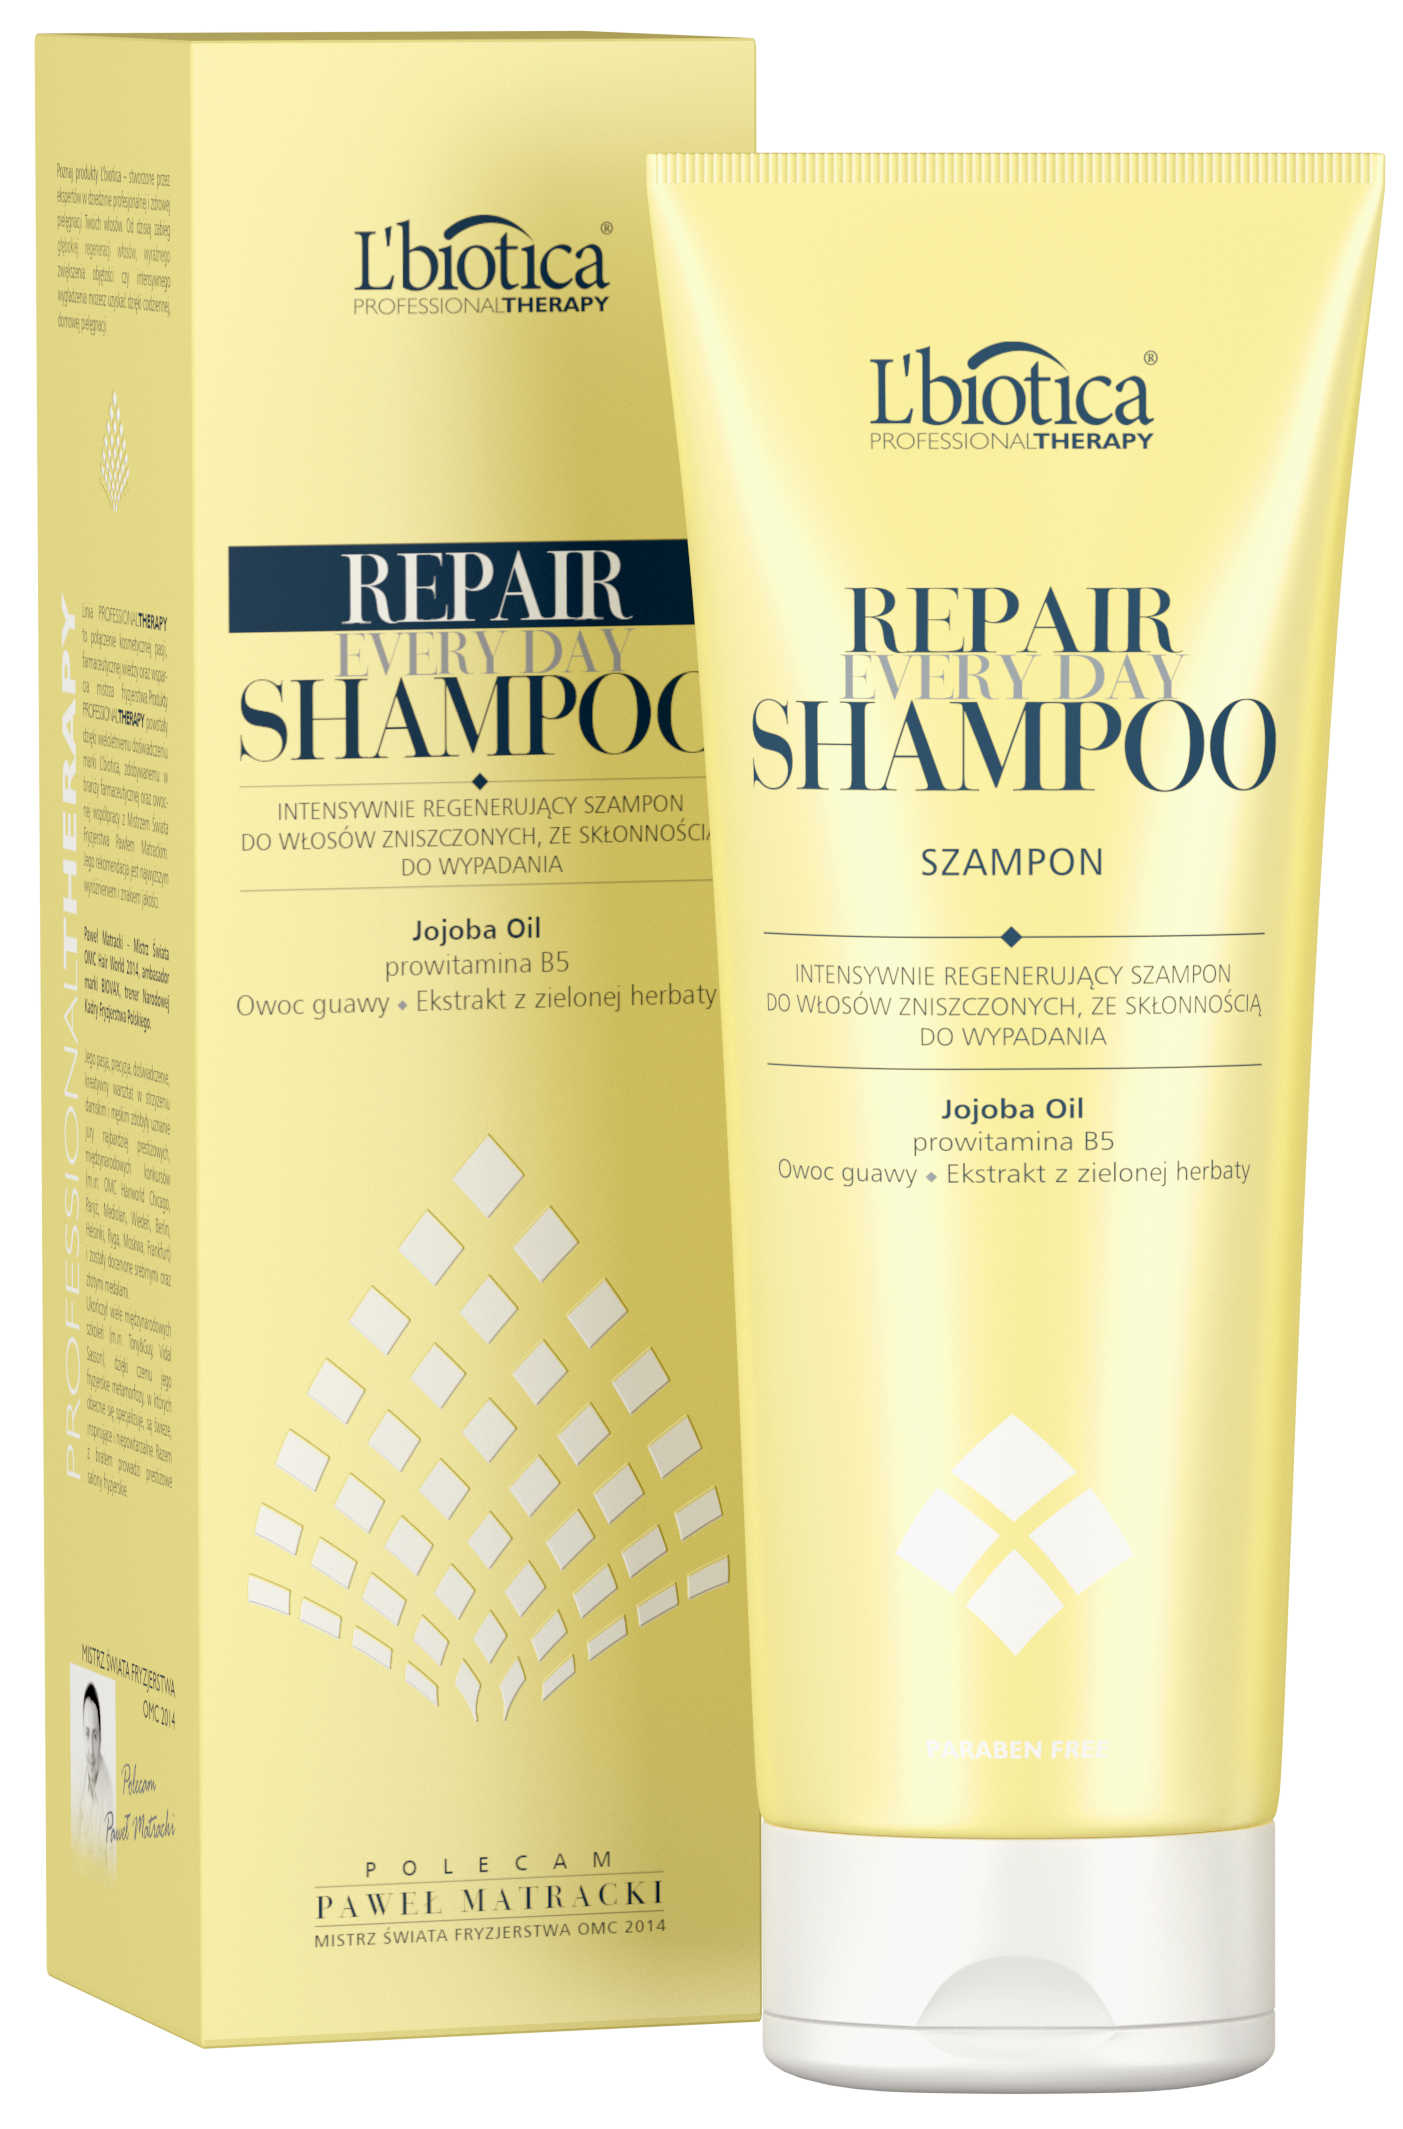 Lbiotica_Professional_Therapy_Repair_szampon_w